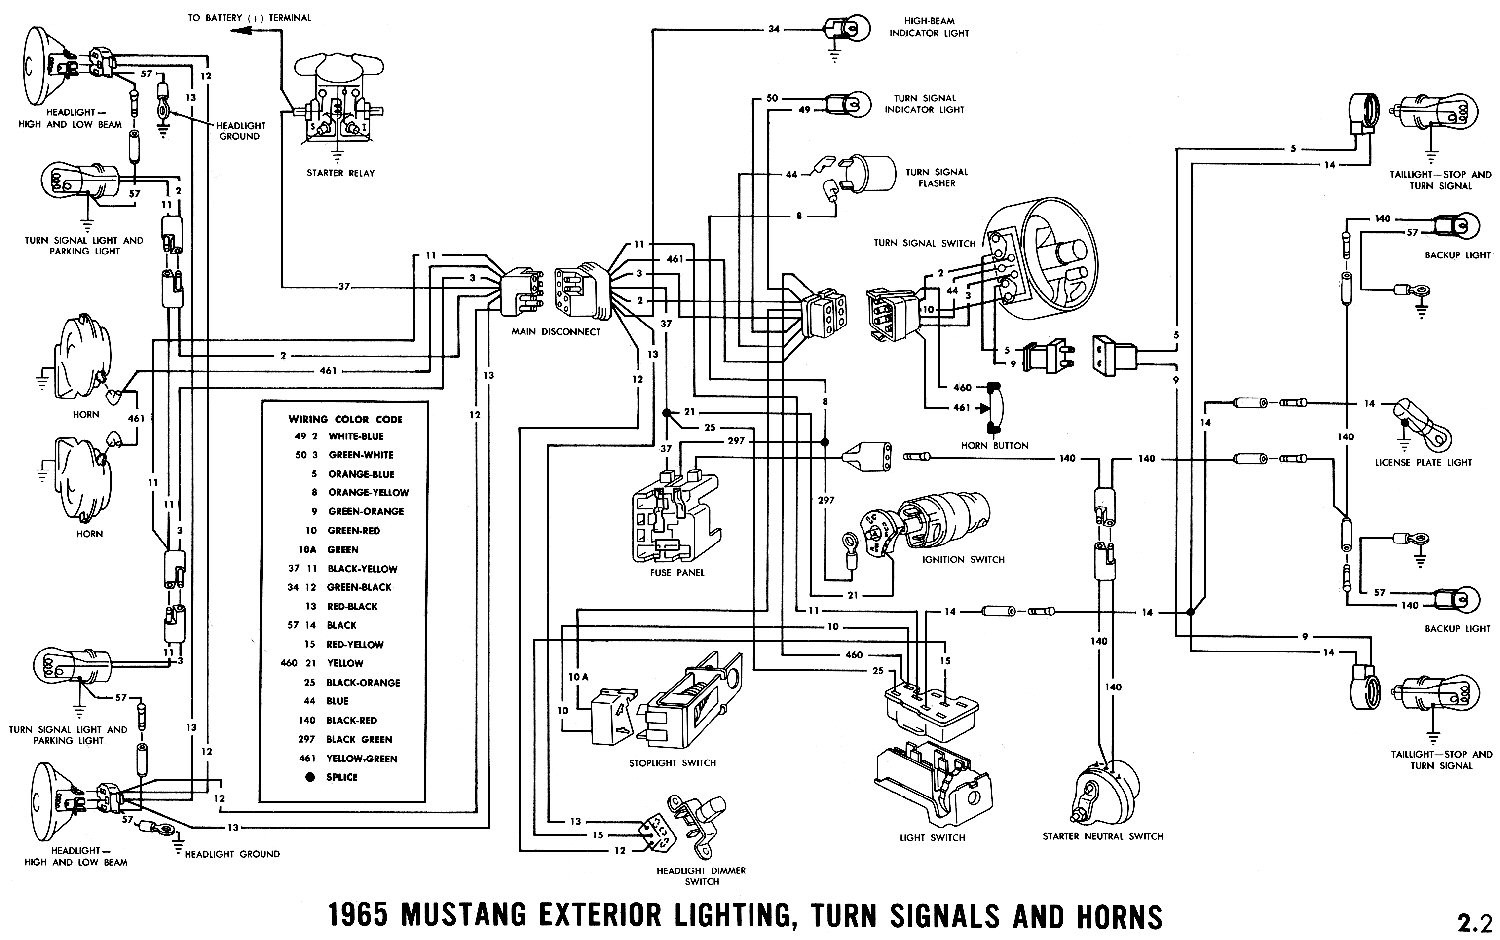 1965 mustang wiring diagrams average joe restoration rh averagejoerestoration 1965 mustang wiring diagram color 1965